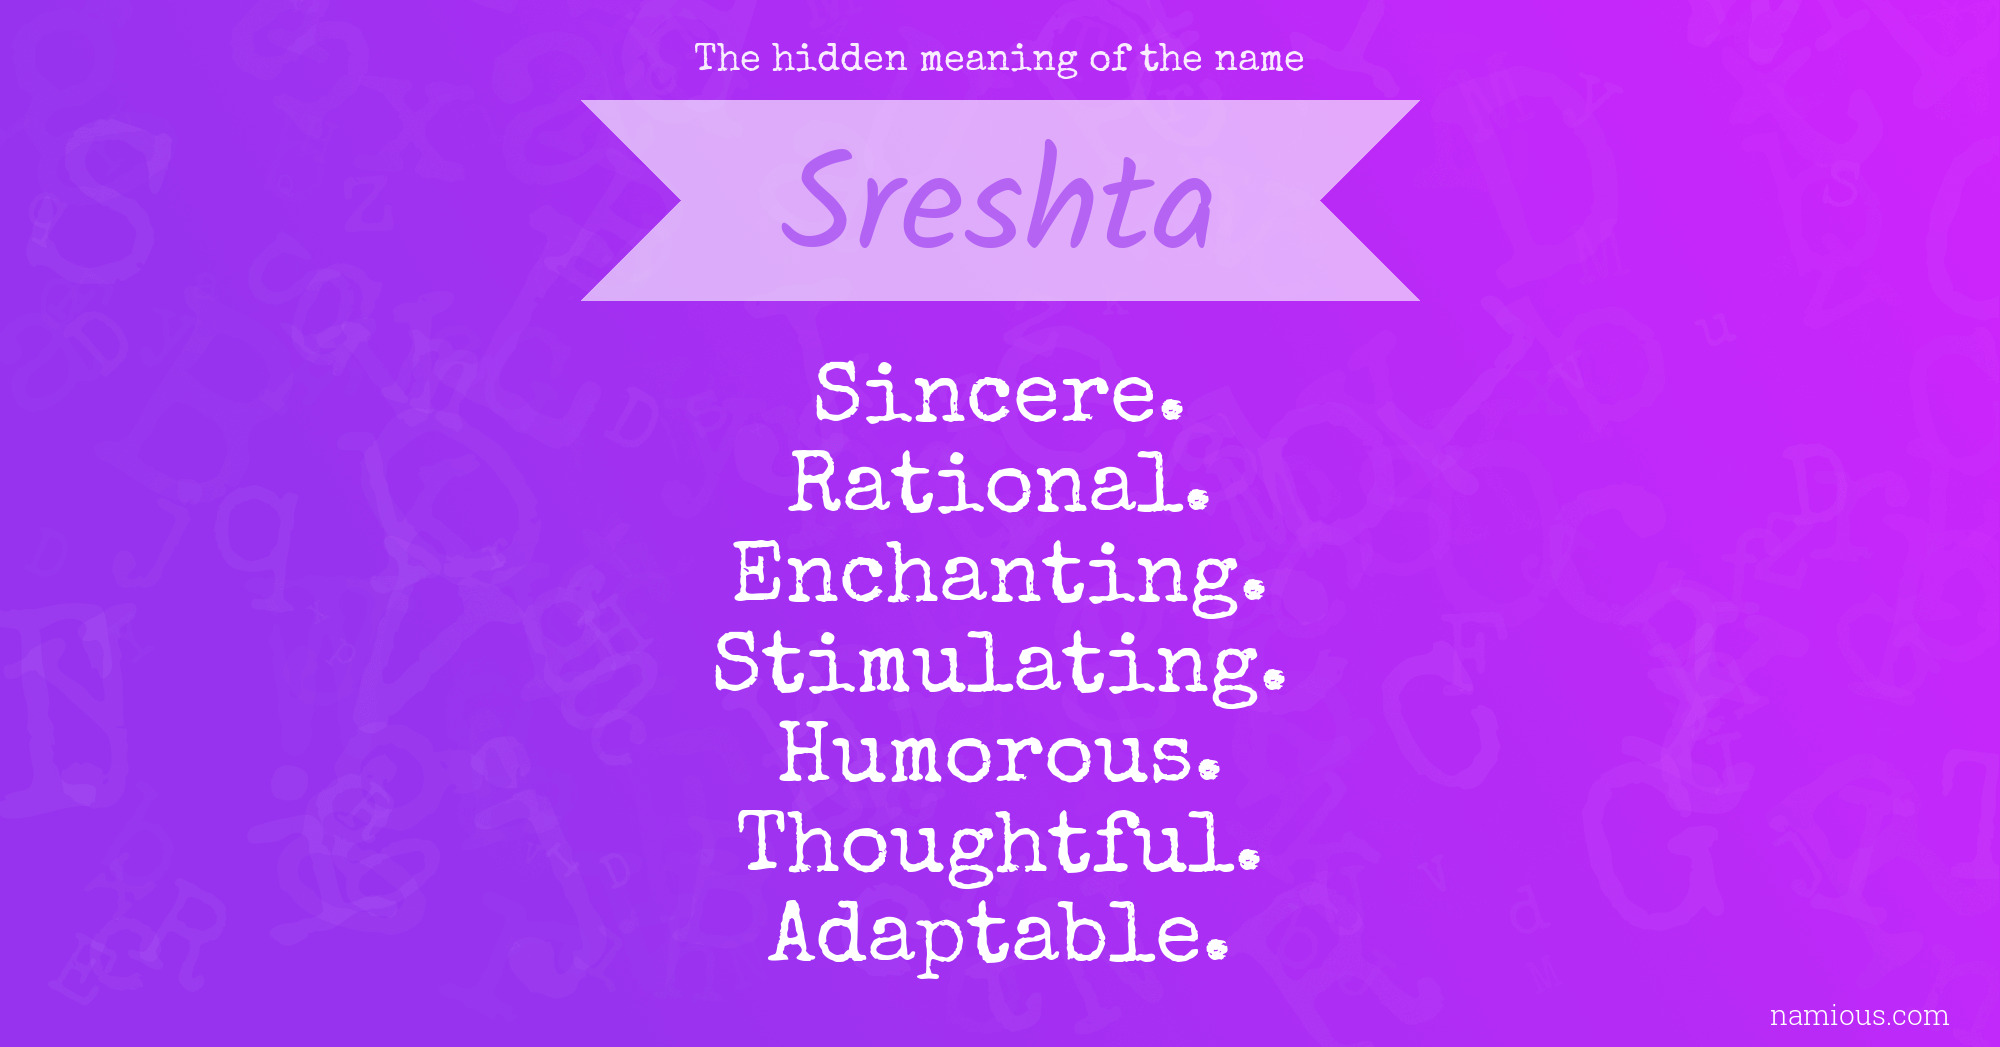 The hidden meaning of the name Sreshta